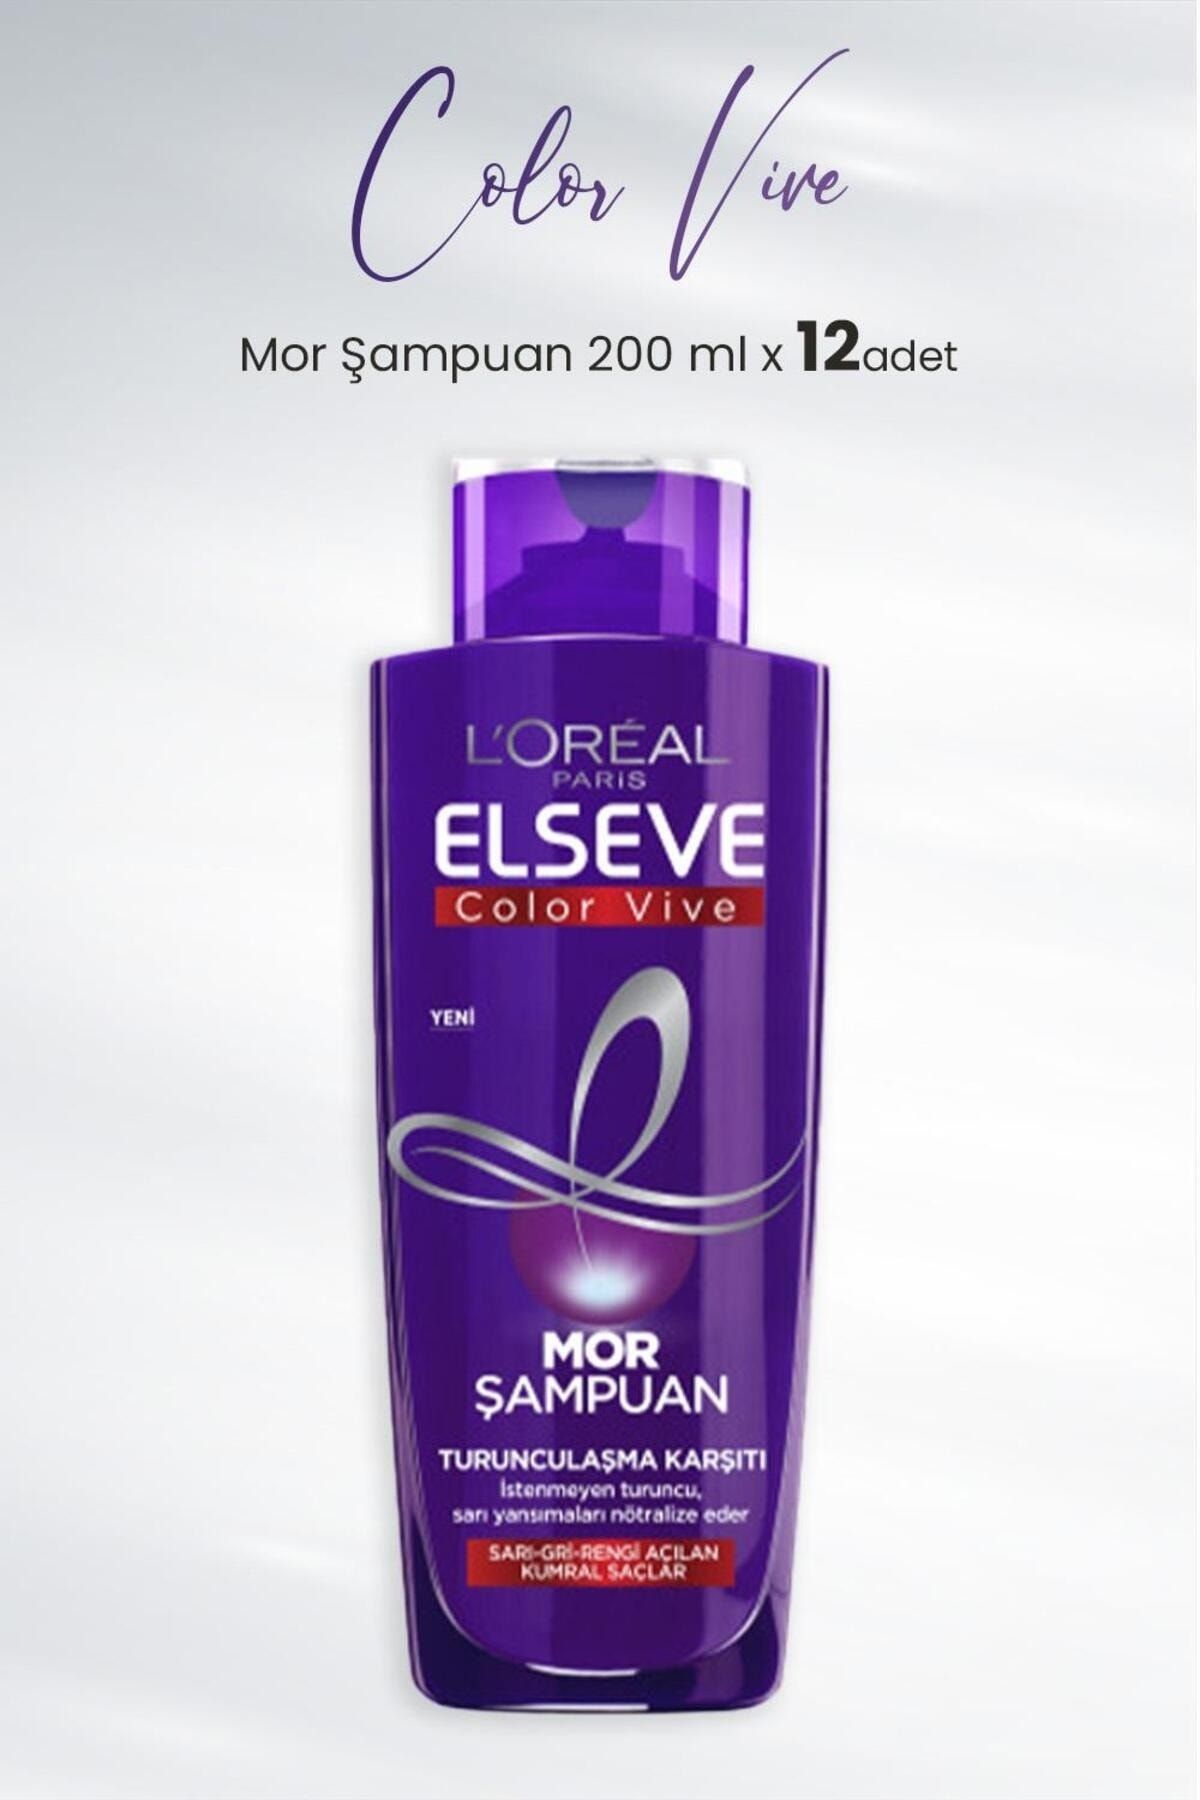 Elseve Color Vive Mor Şampuan Turunculaşma Karşıtı 200 ml x 12 Adet